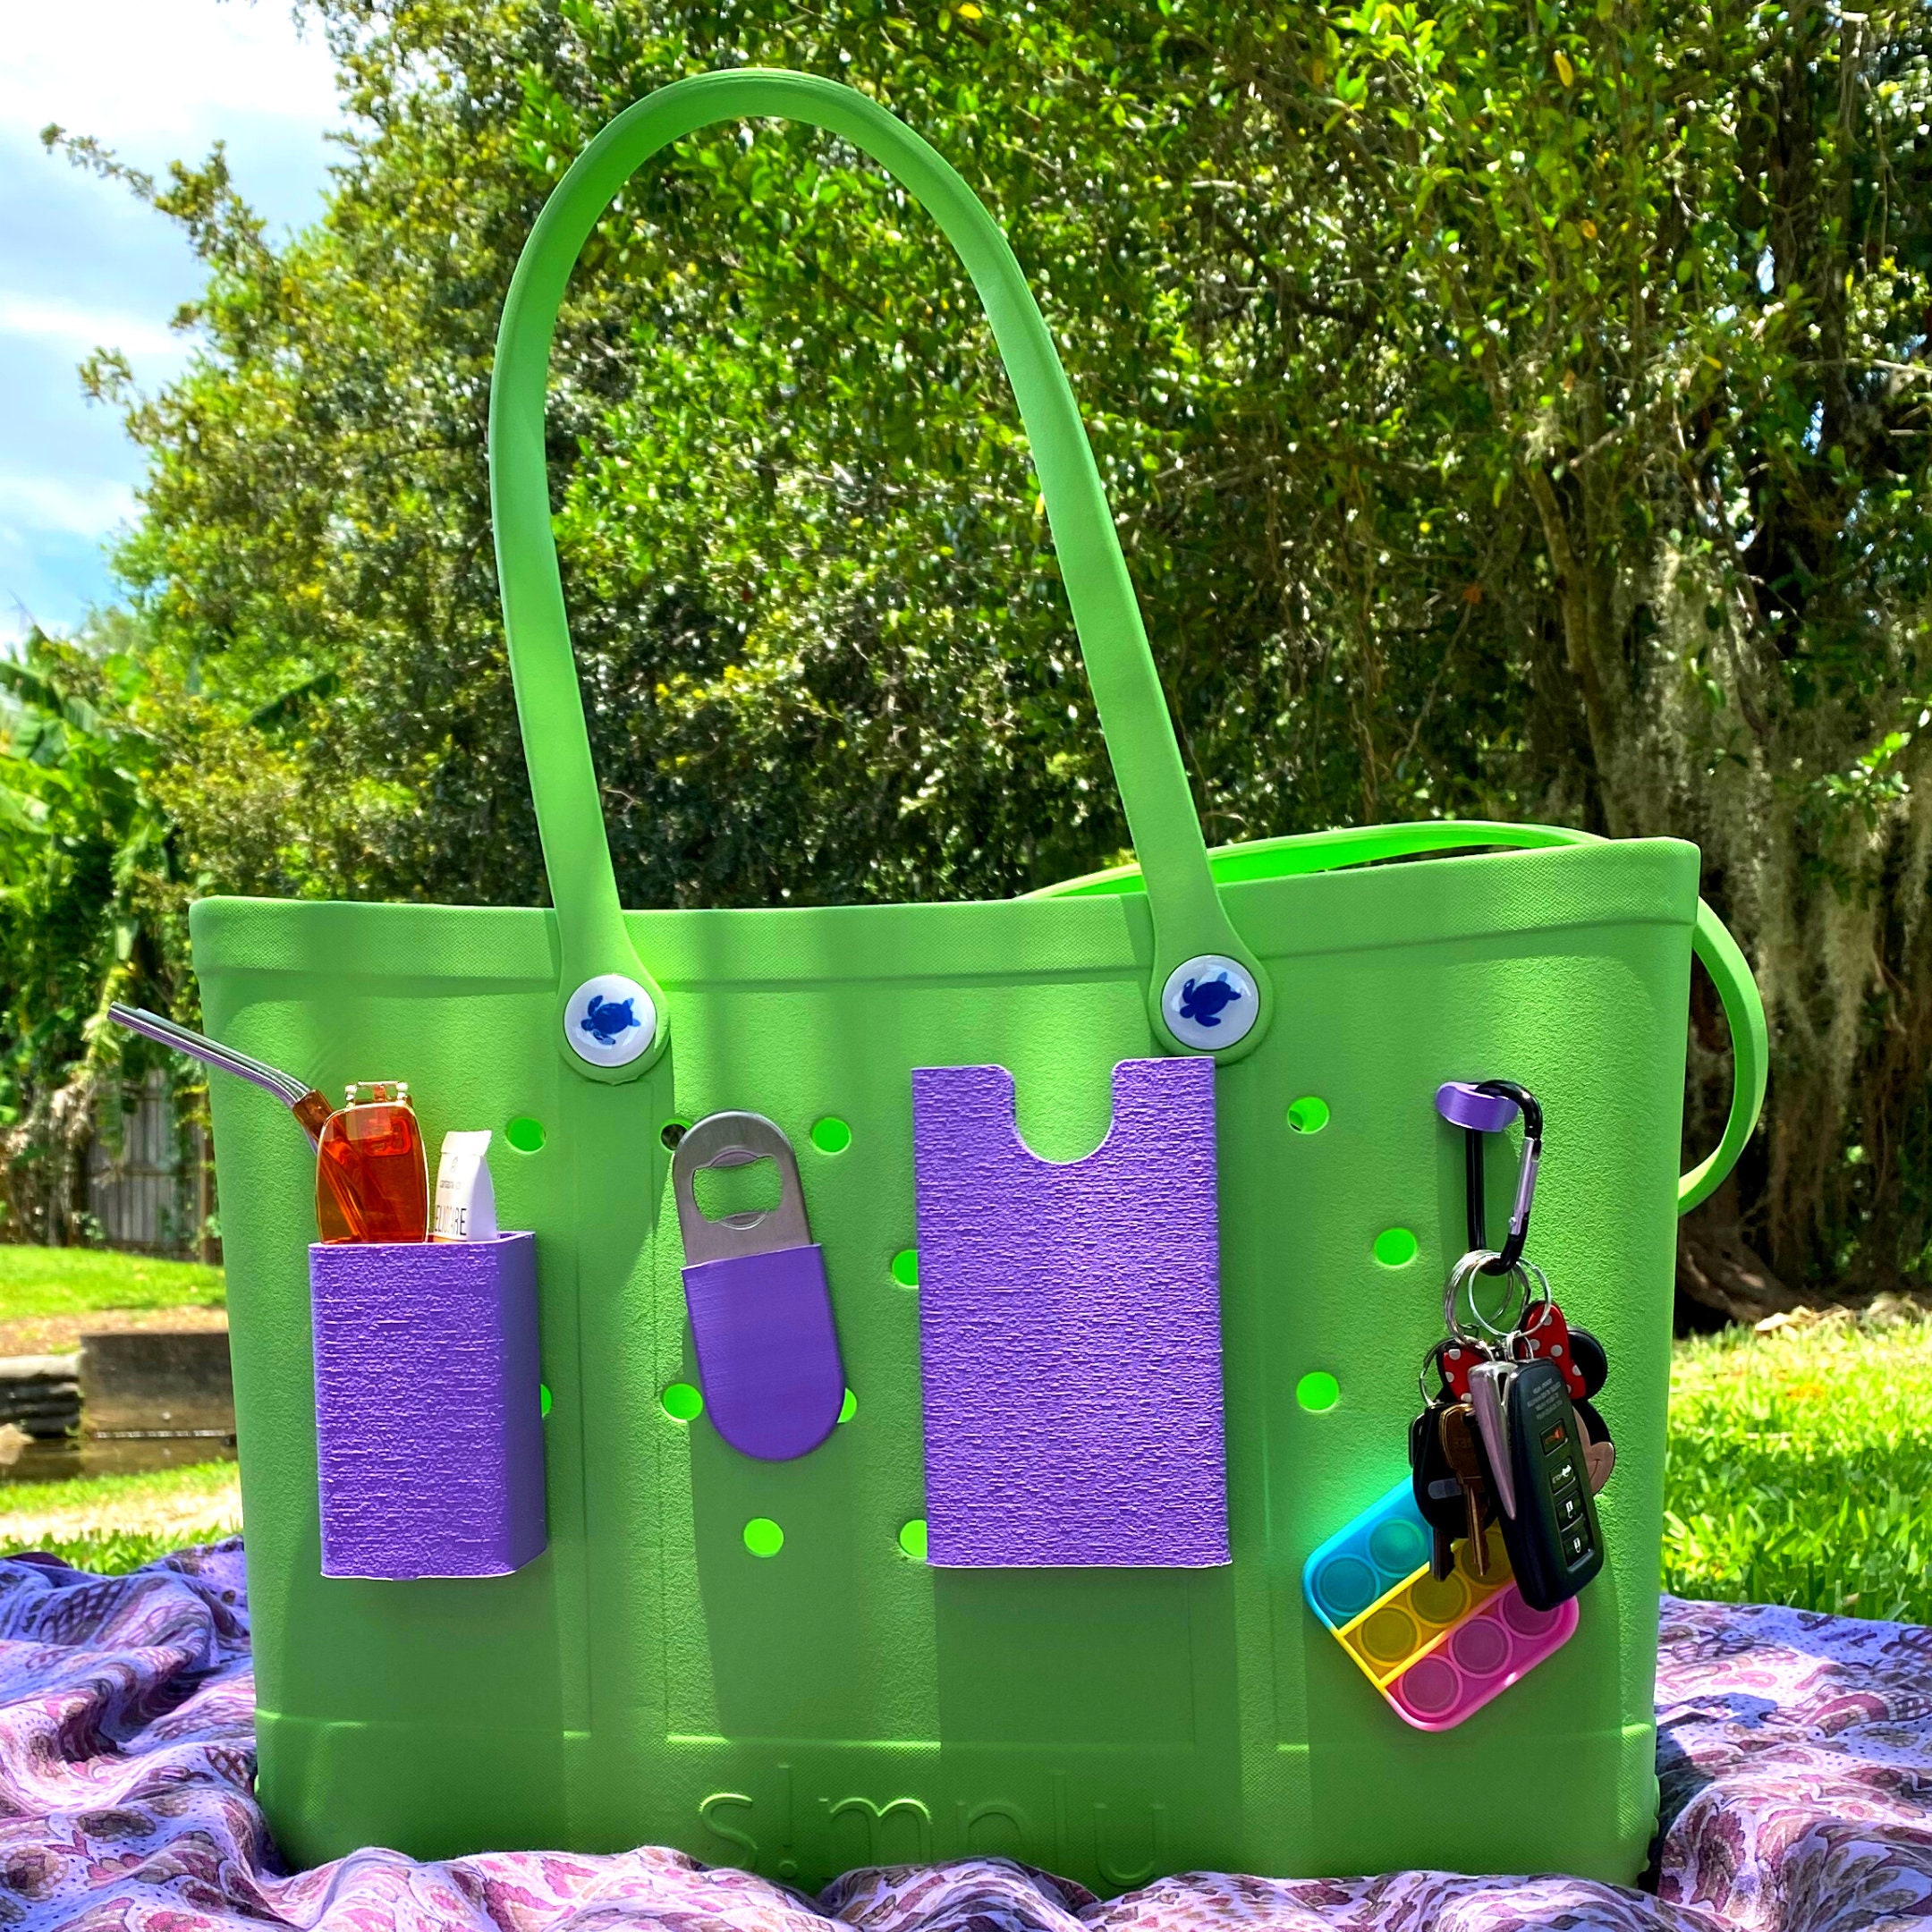  BOGLETS - Bogg Bag Hook HOLDER Charm Accessory - Secure &  Organize Your Valuables in your Bogg Bag - Multiple Color Options! (Black)  : Sports & Outdoors